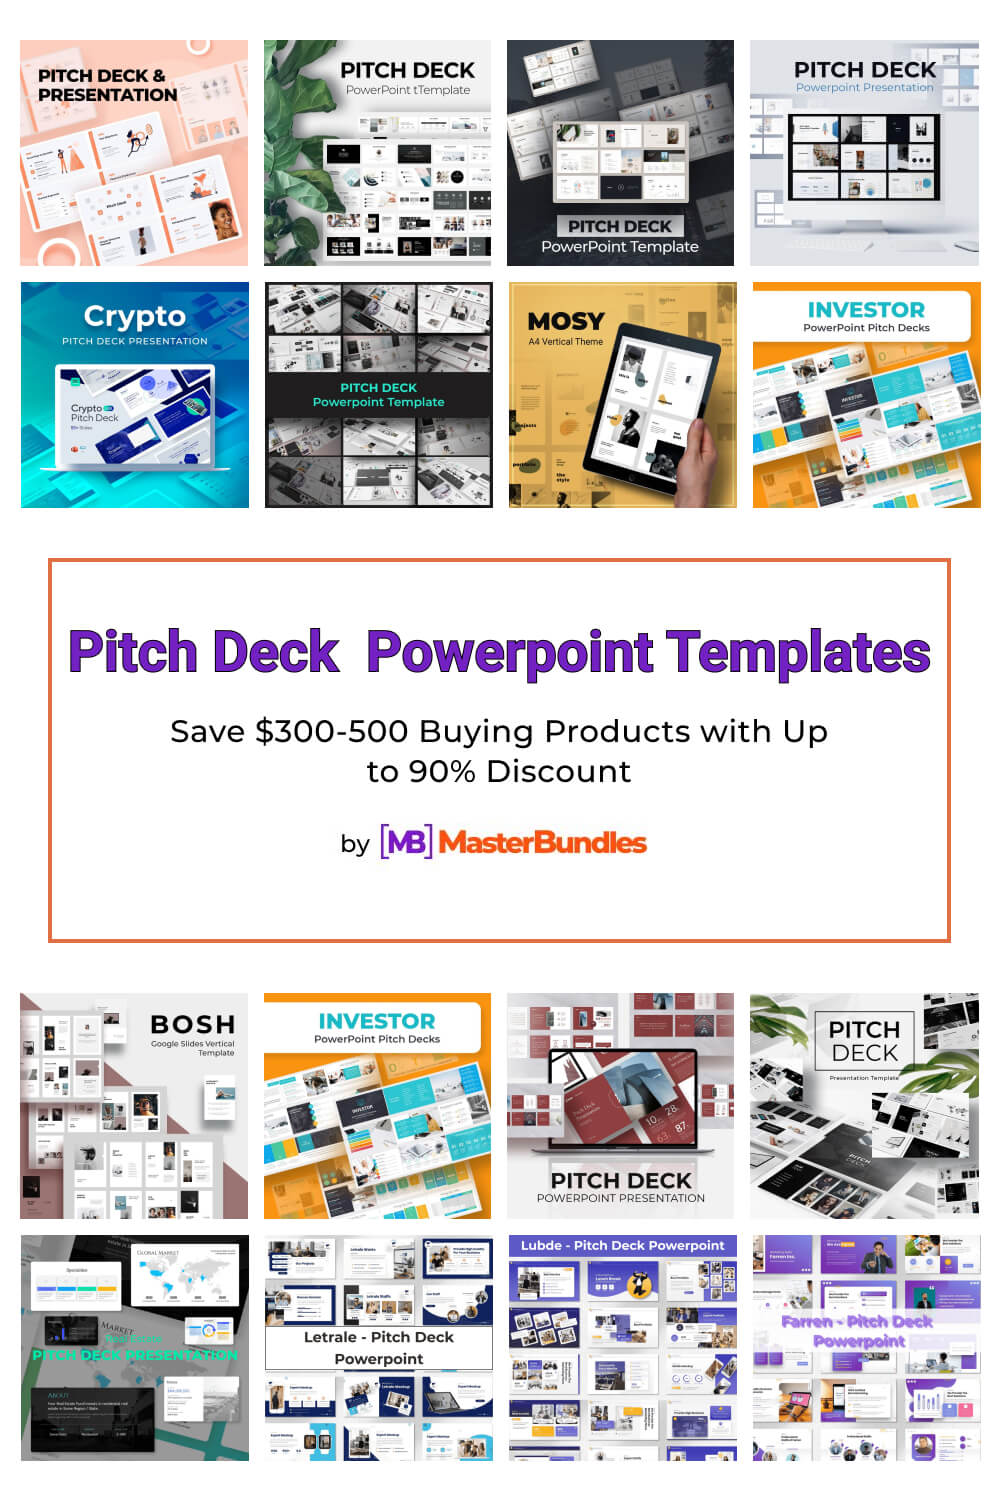 pitch deck powerpoint templates pinterest image.